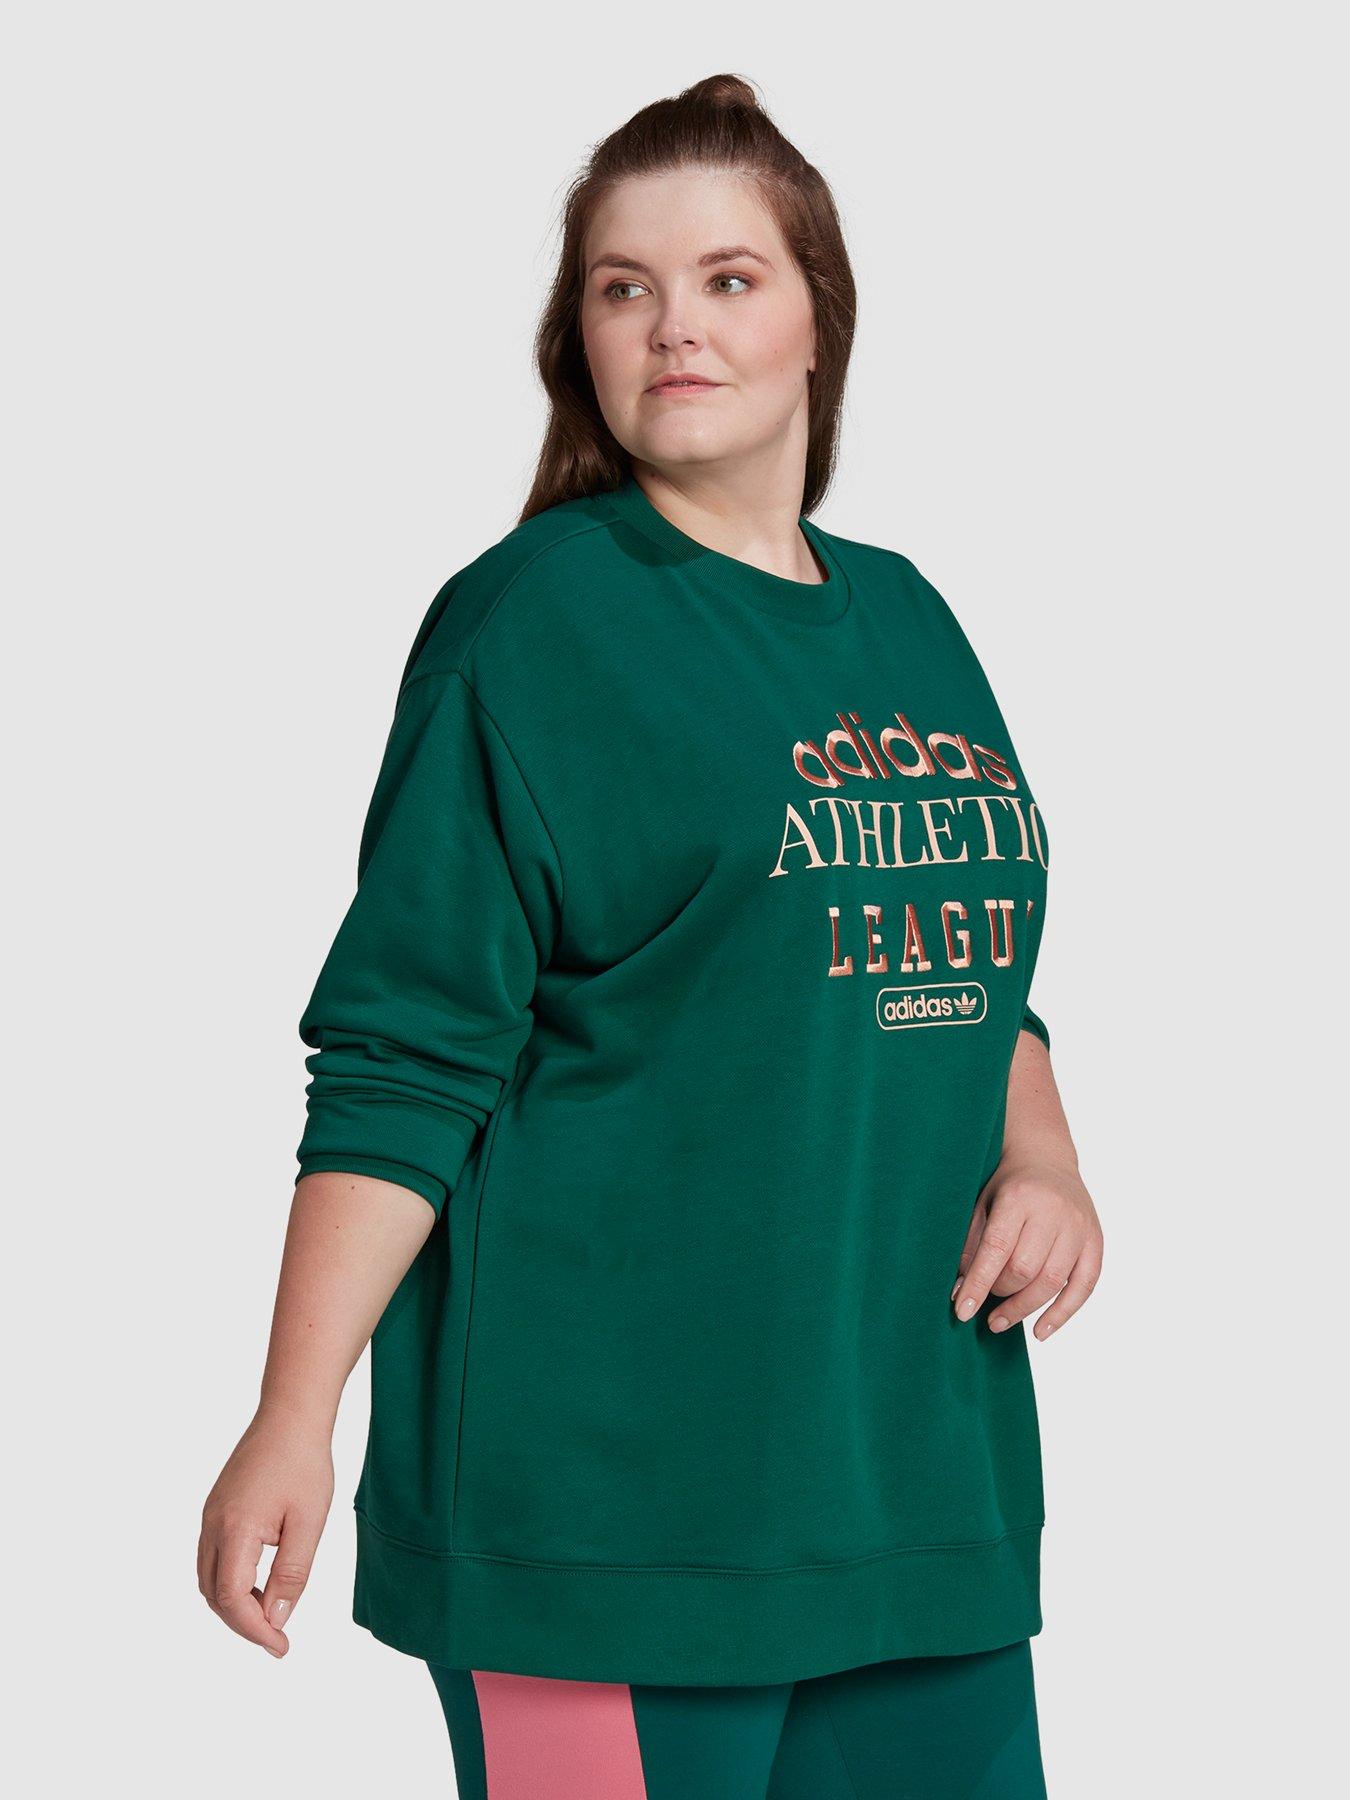 Hoodies & Sweatshirts Vintage Sports Crew Sweat Top (Plus Size) - Green